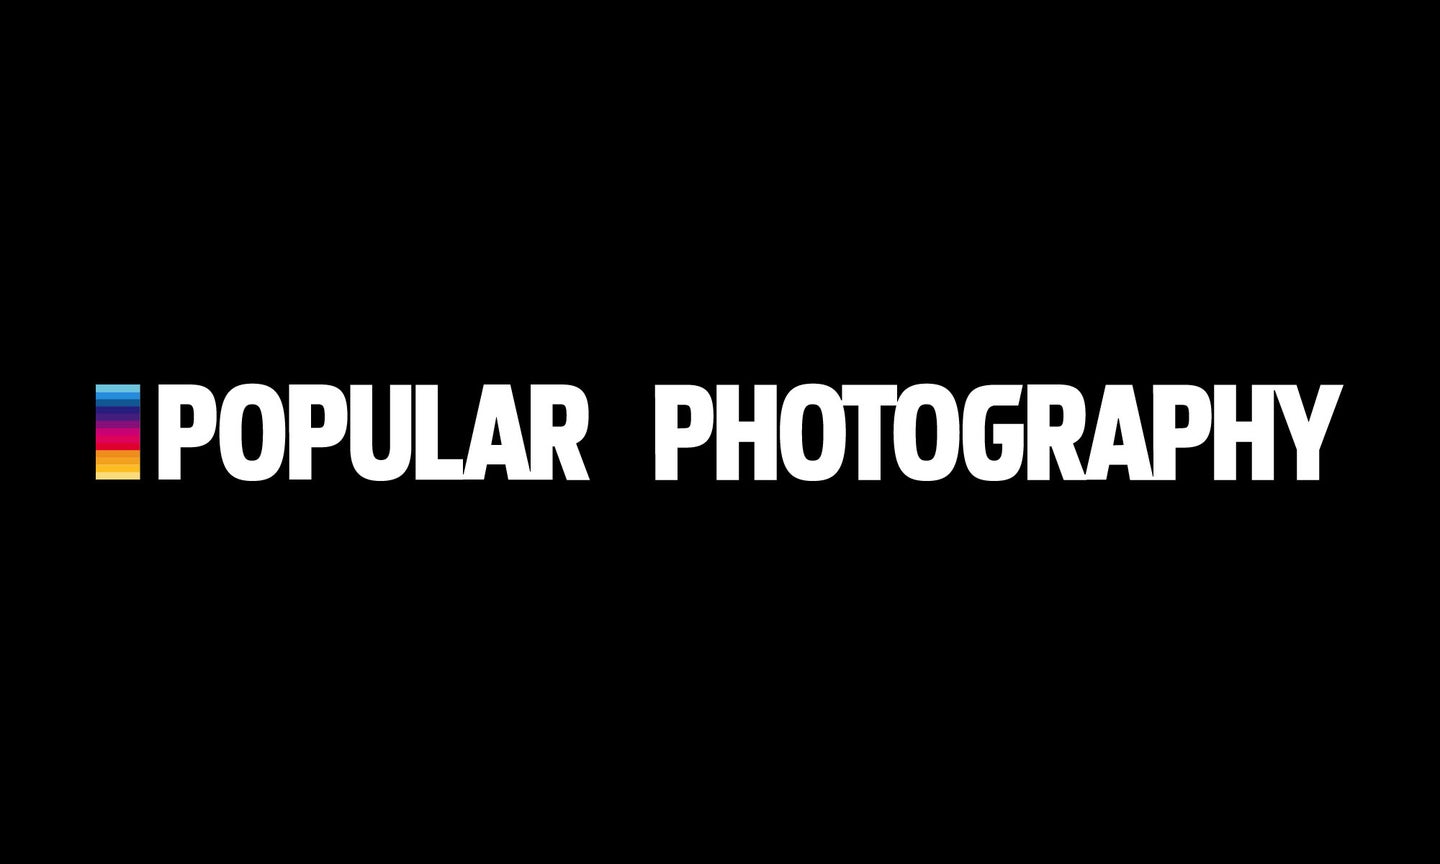 popular photography logo